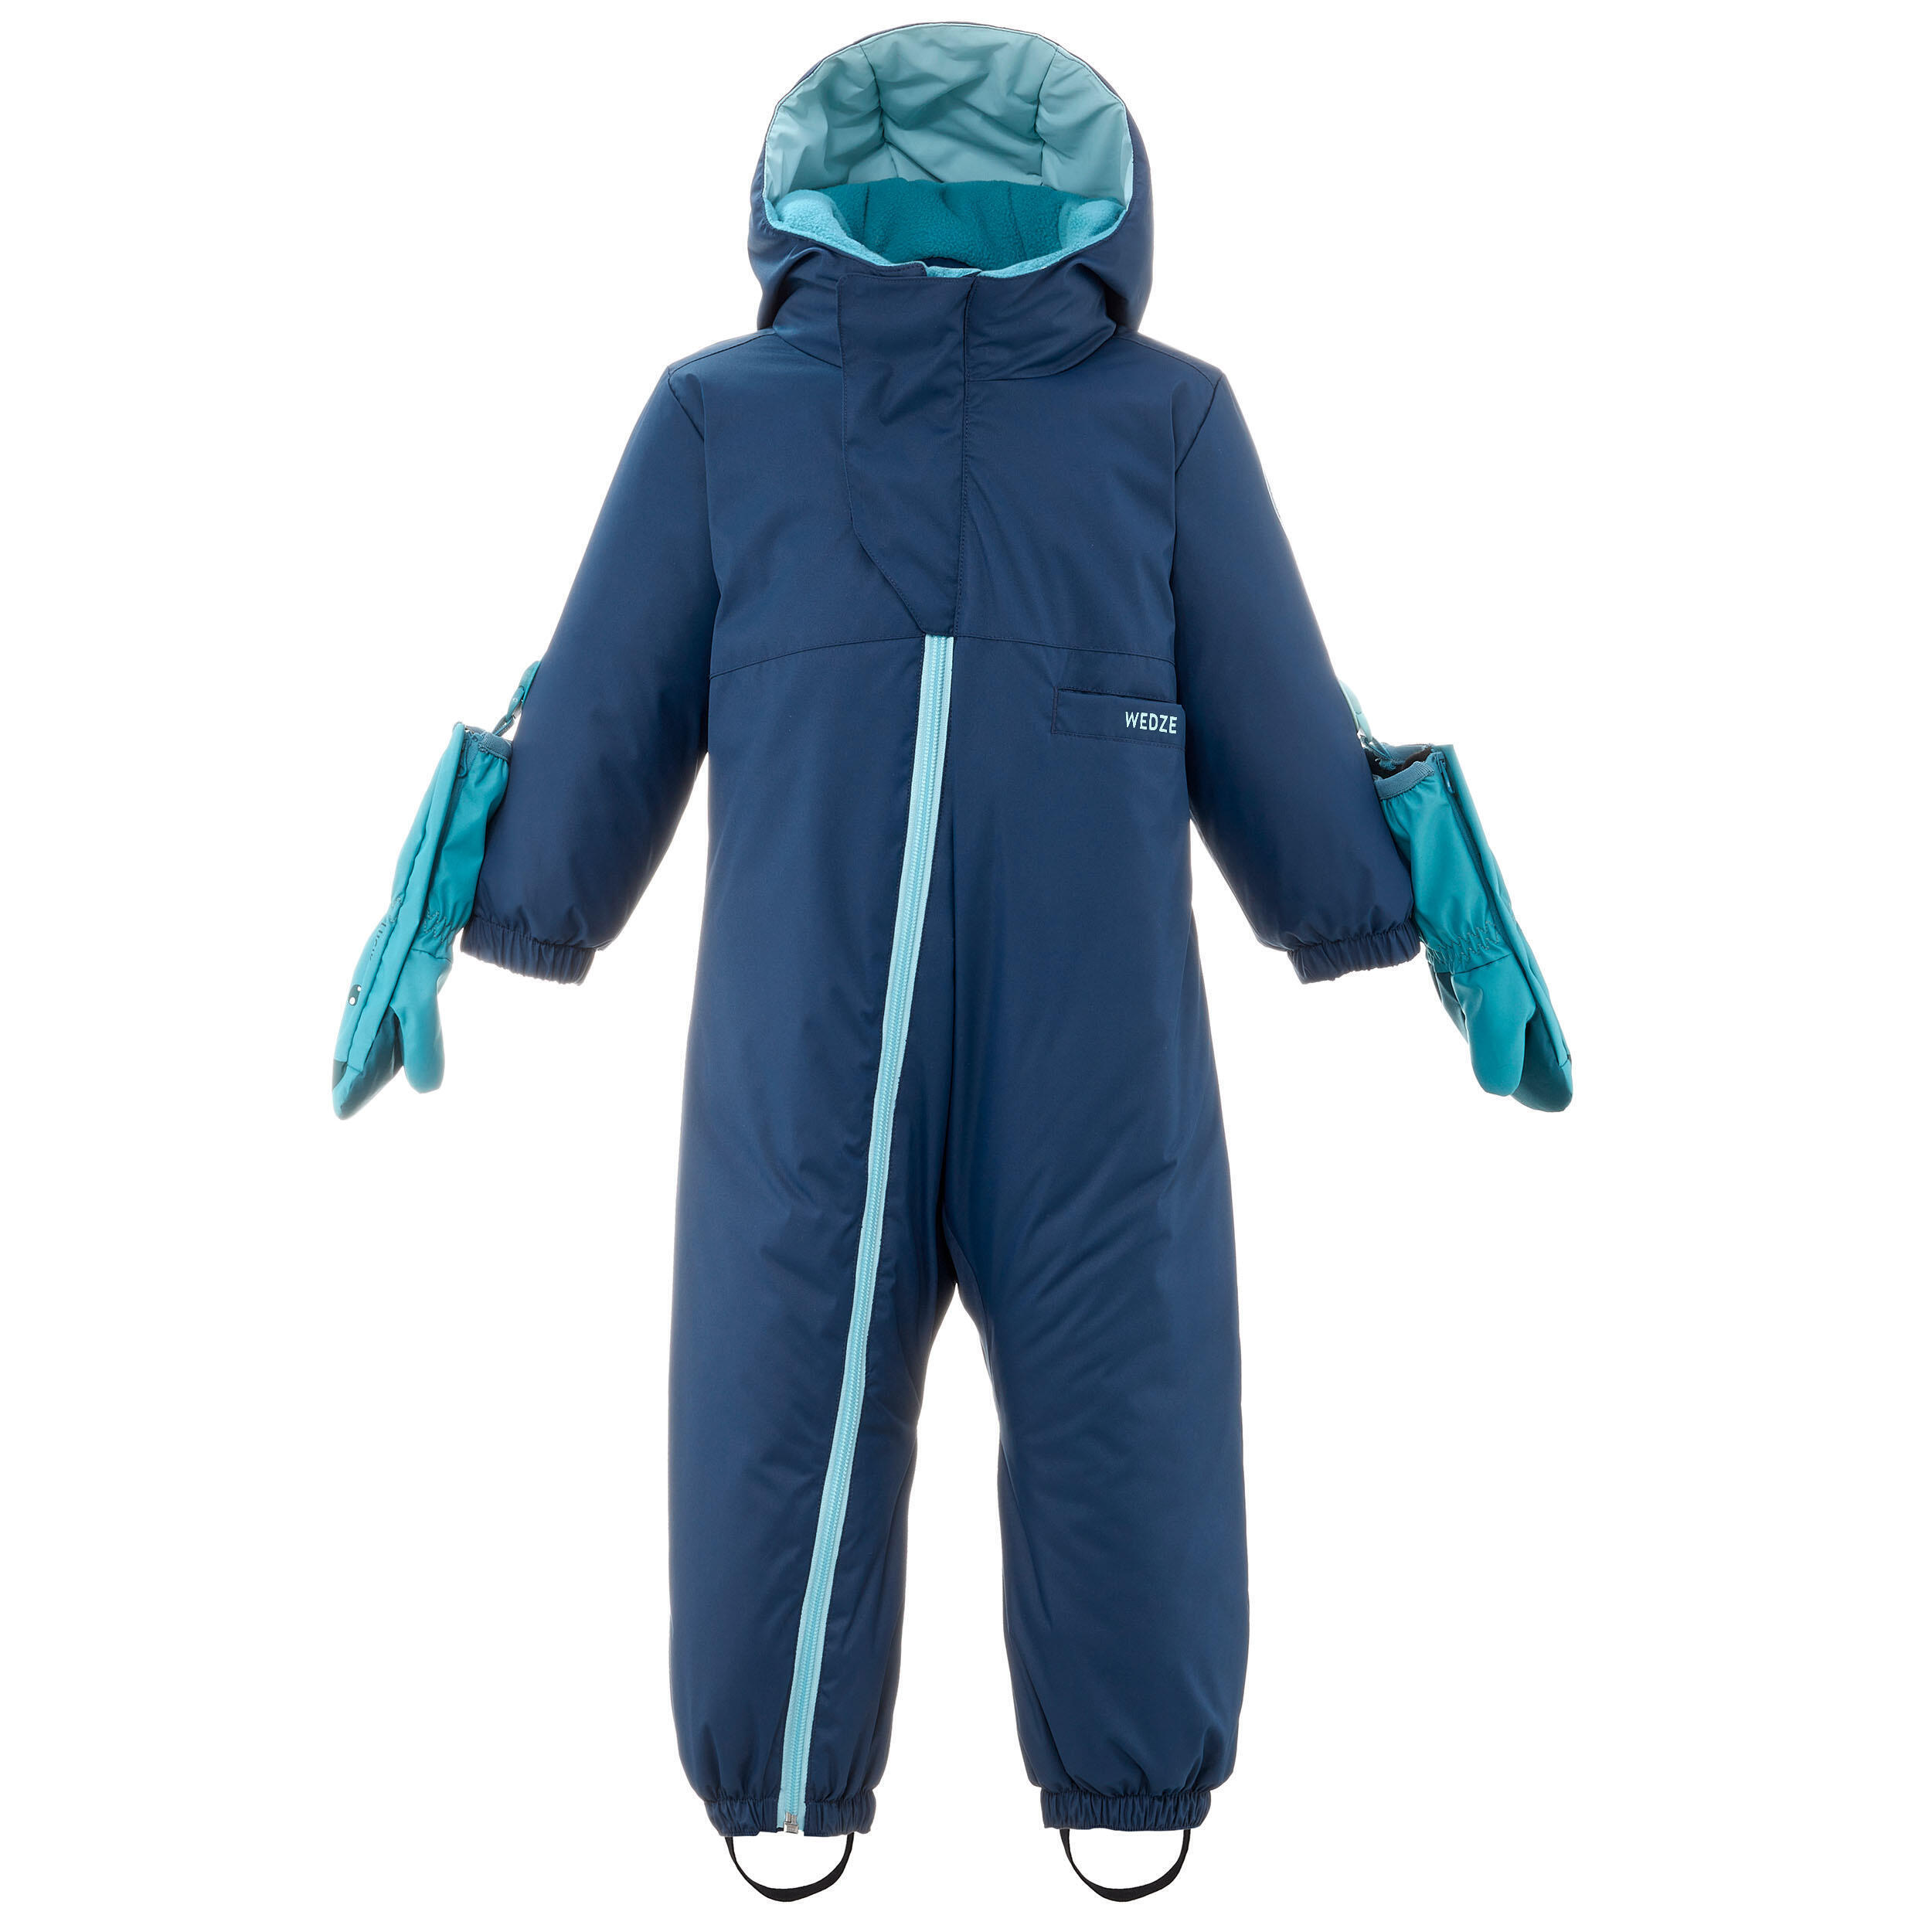 REFURBISHED WARM BABY SKI SUIT - 500 WARM LUGIKLIP - BLUE - A GRADE 5/7